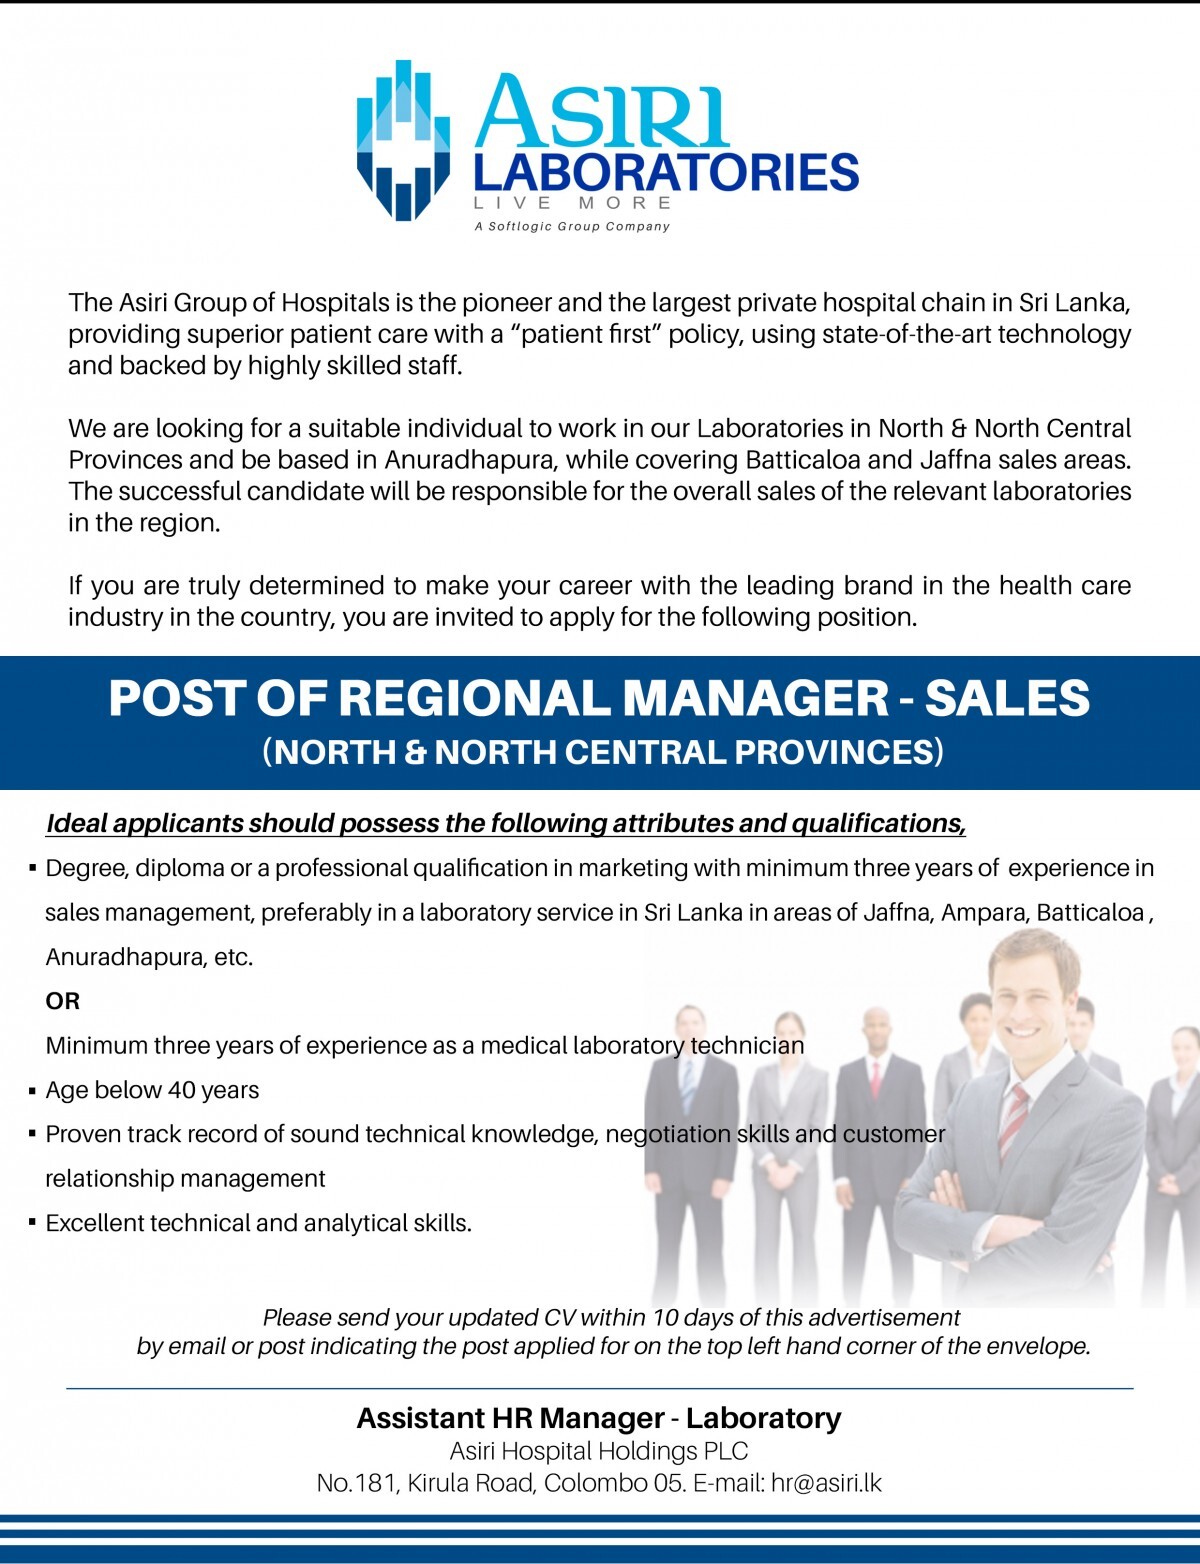 Regional Manager (Sales) Jobs Vacancies - Asiri Hospital Job Vacancy